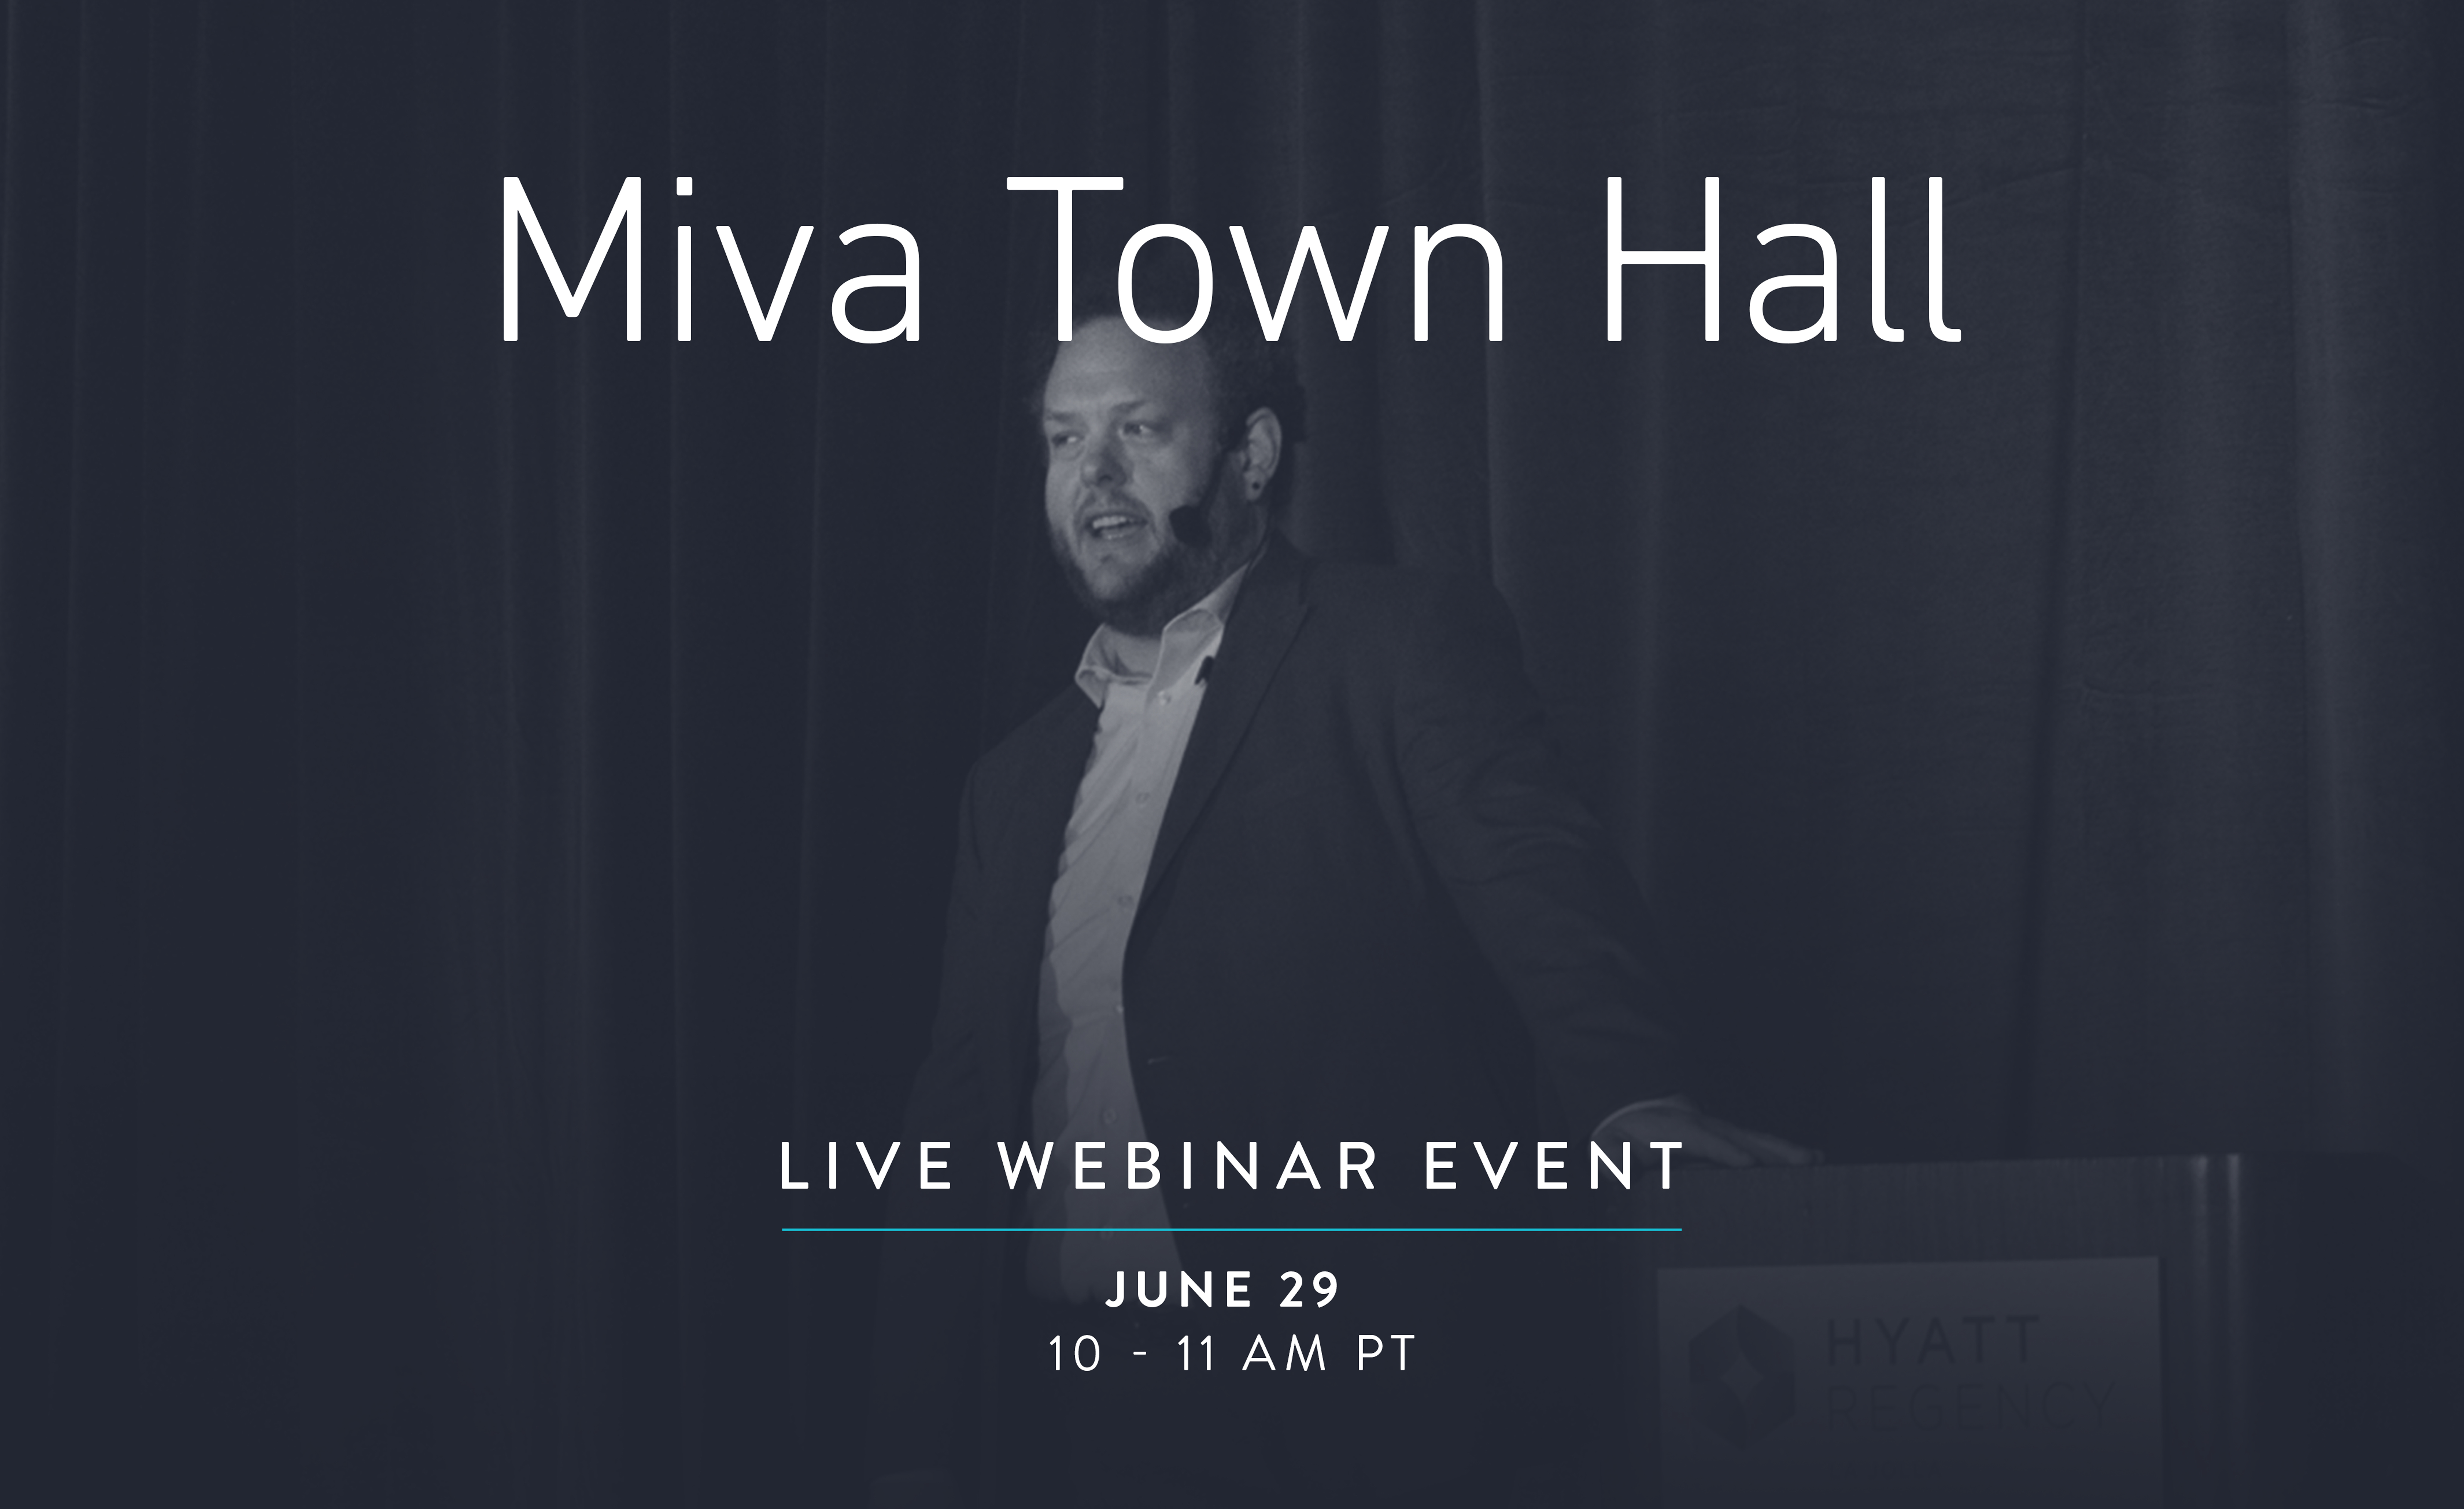 Miva Town Hall - Live Webinar Event